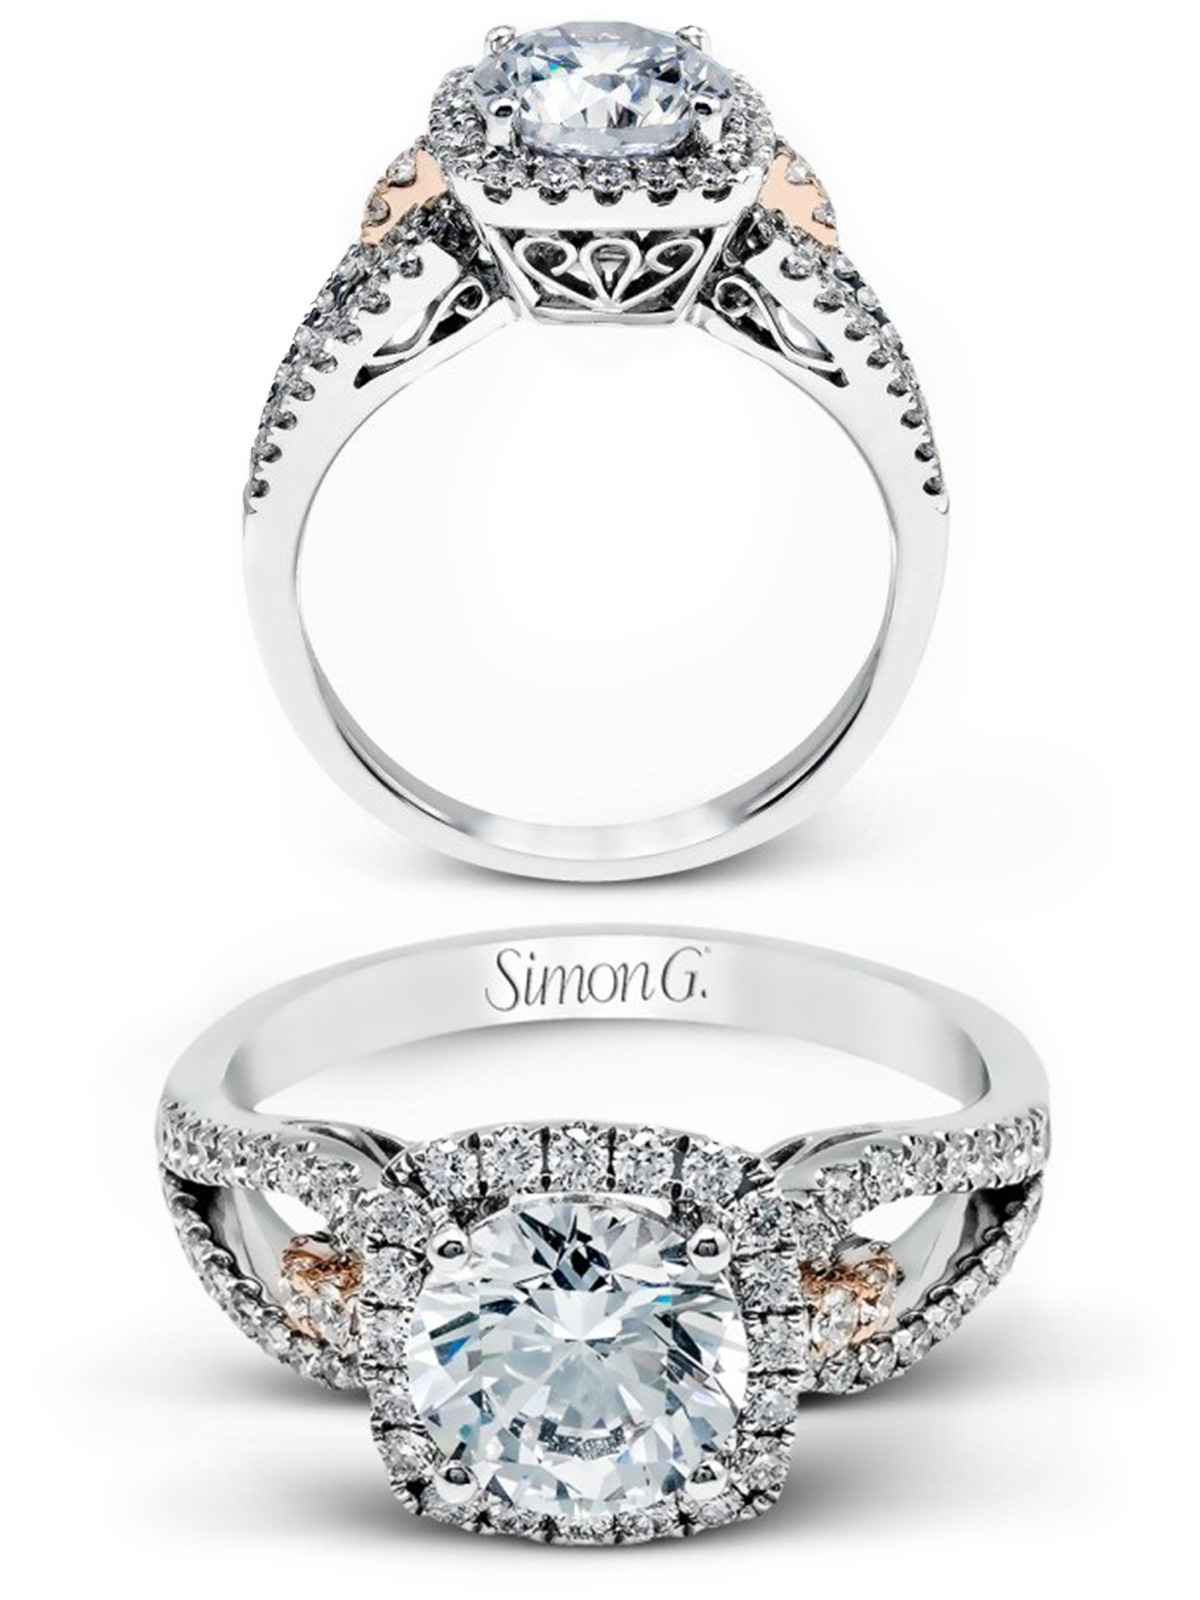 simon g jewelry 2017 wedding trends diamond engagement ring mr1828 white rose gold halo ring pink diamonds setting